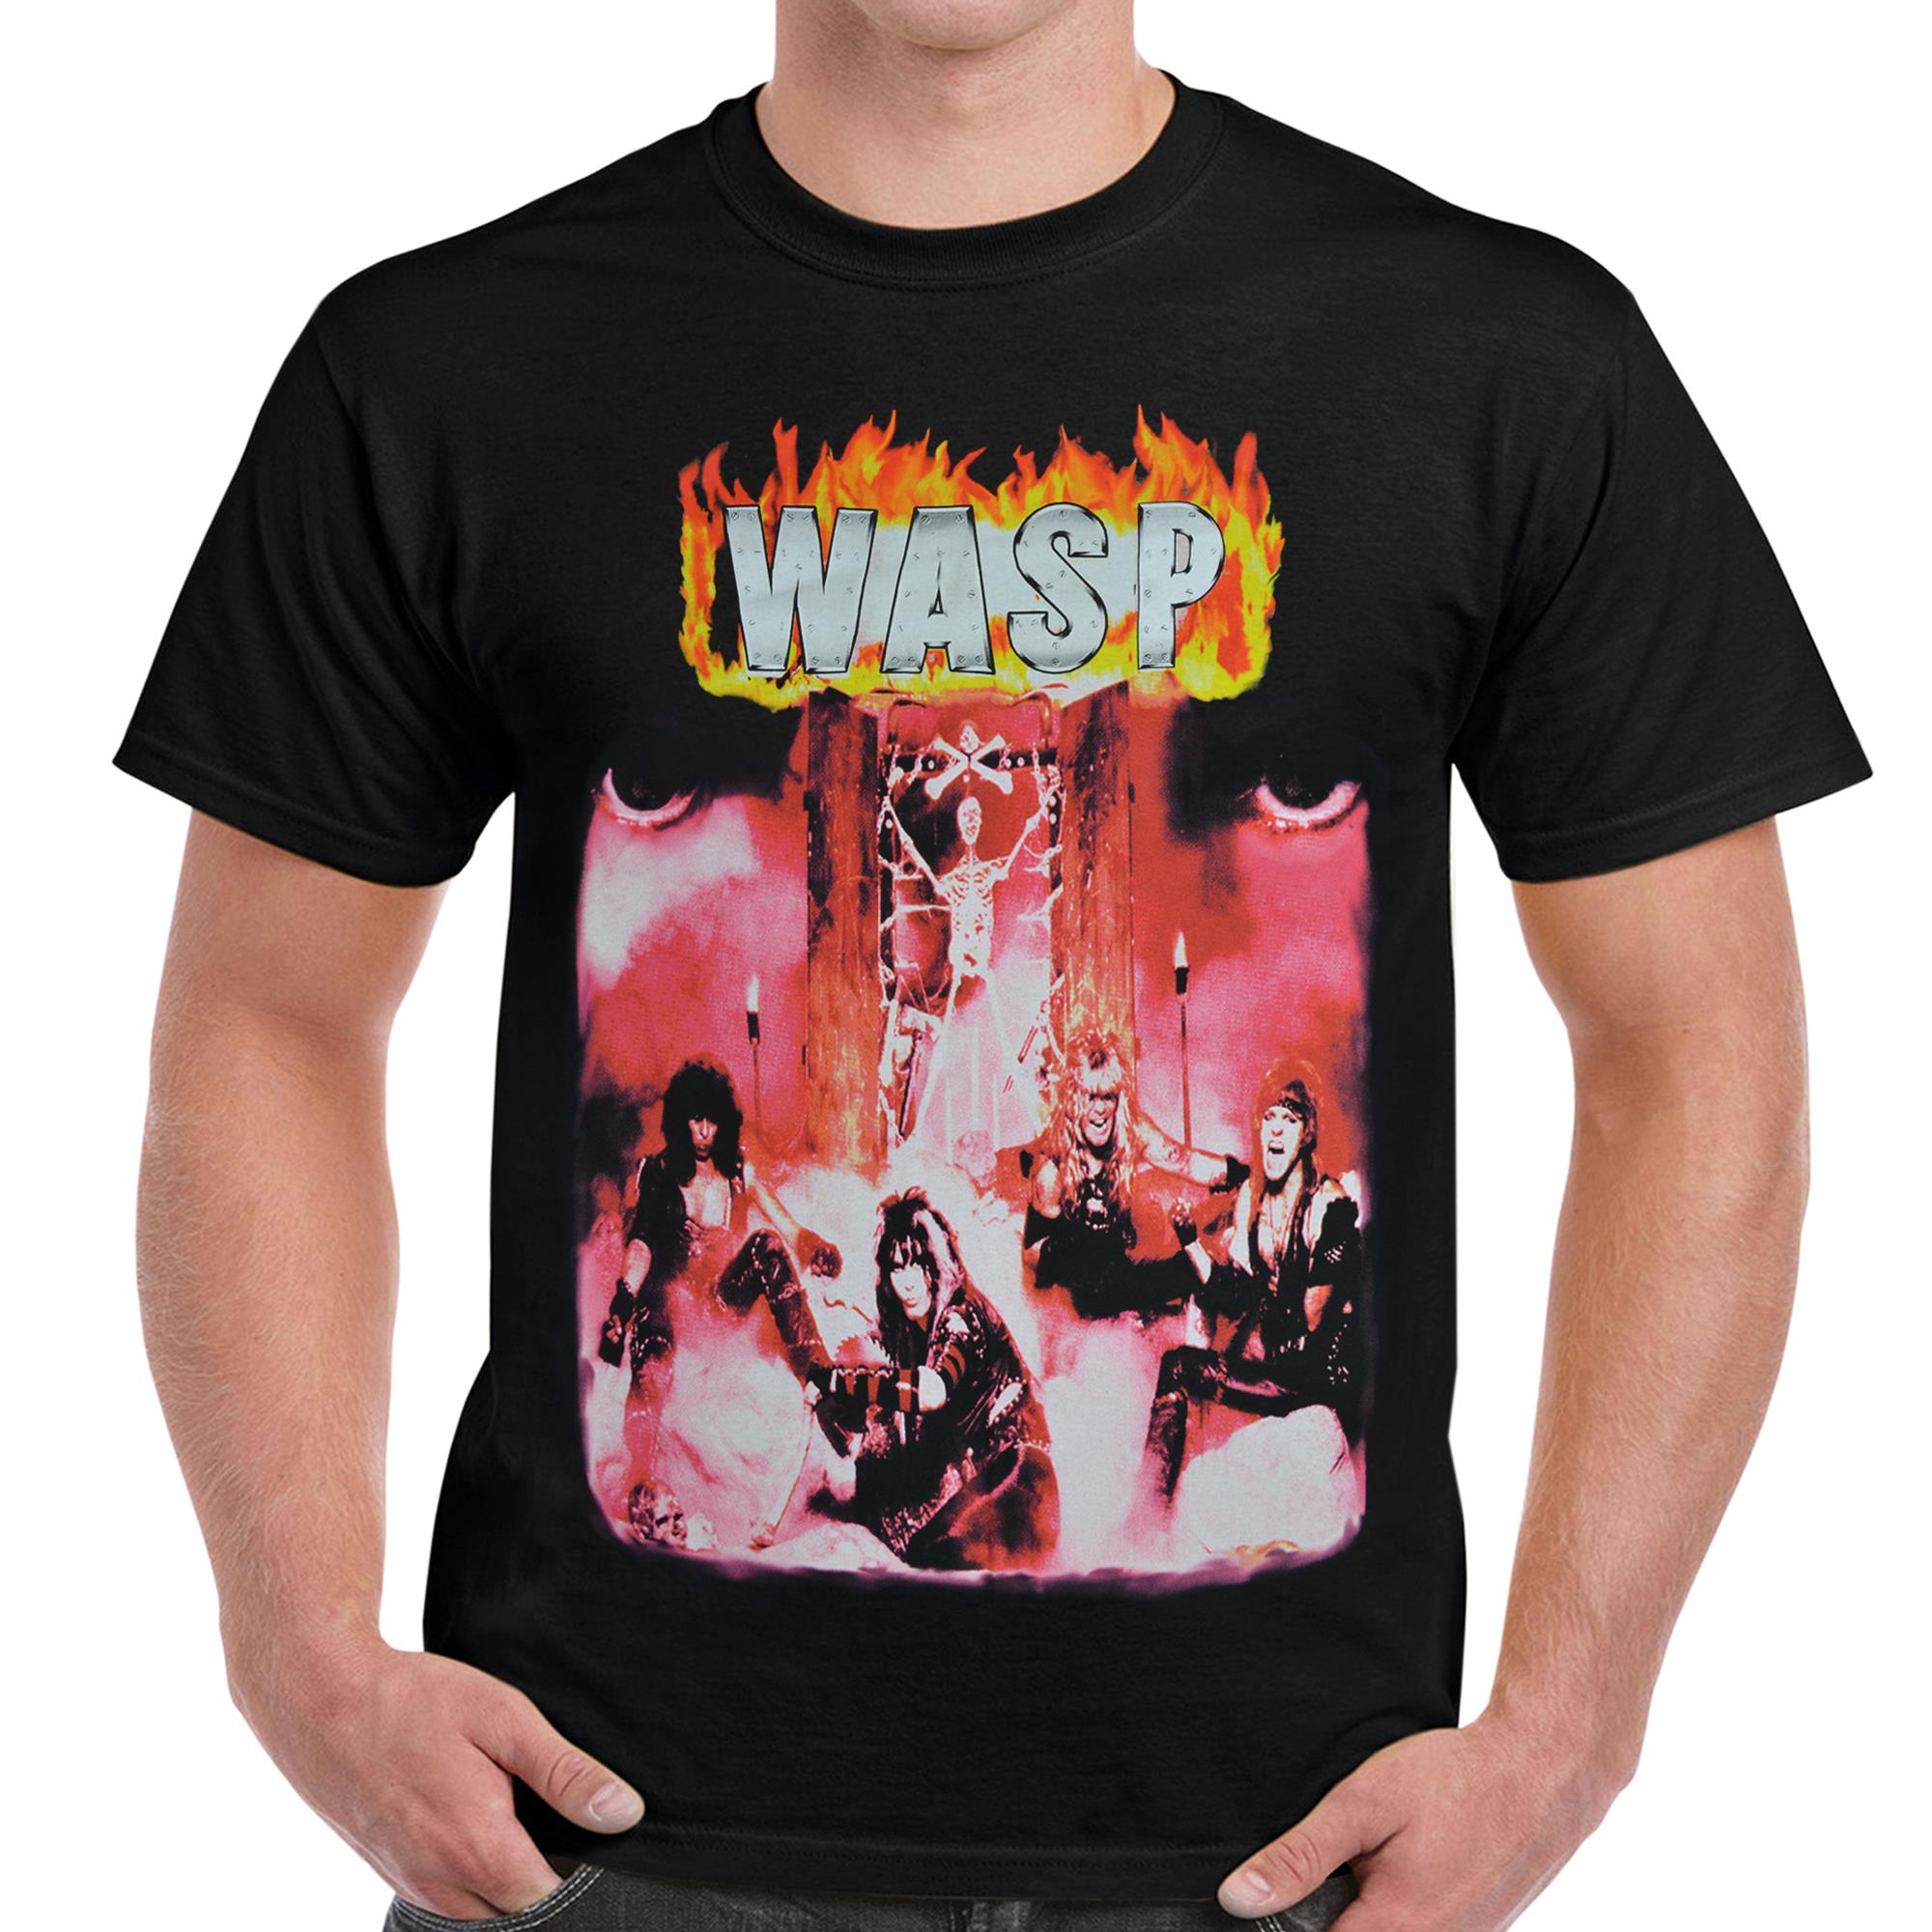 shirt Re-Idolized shirt American heavy metal band shirt Men/'s size M W.A.S.P